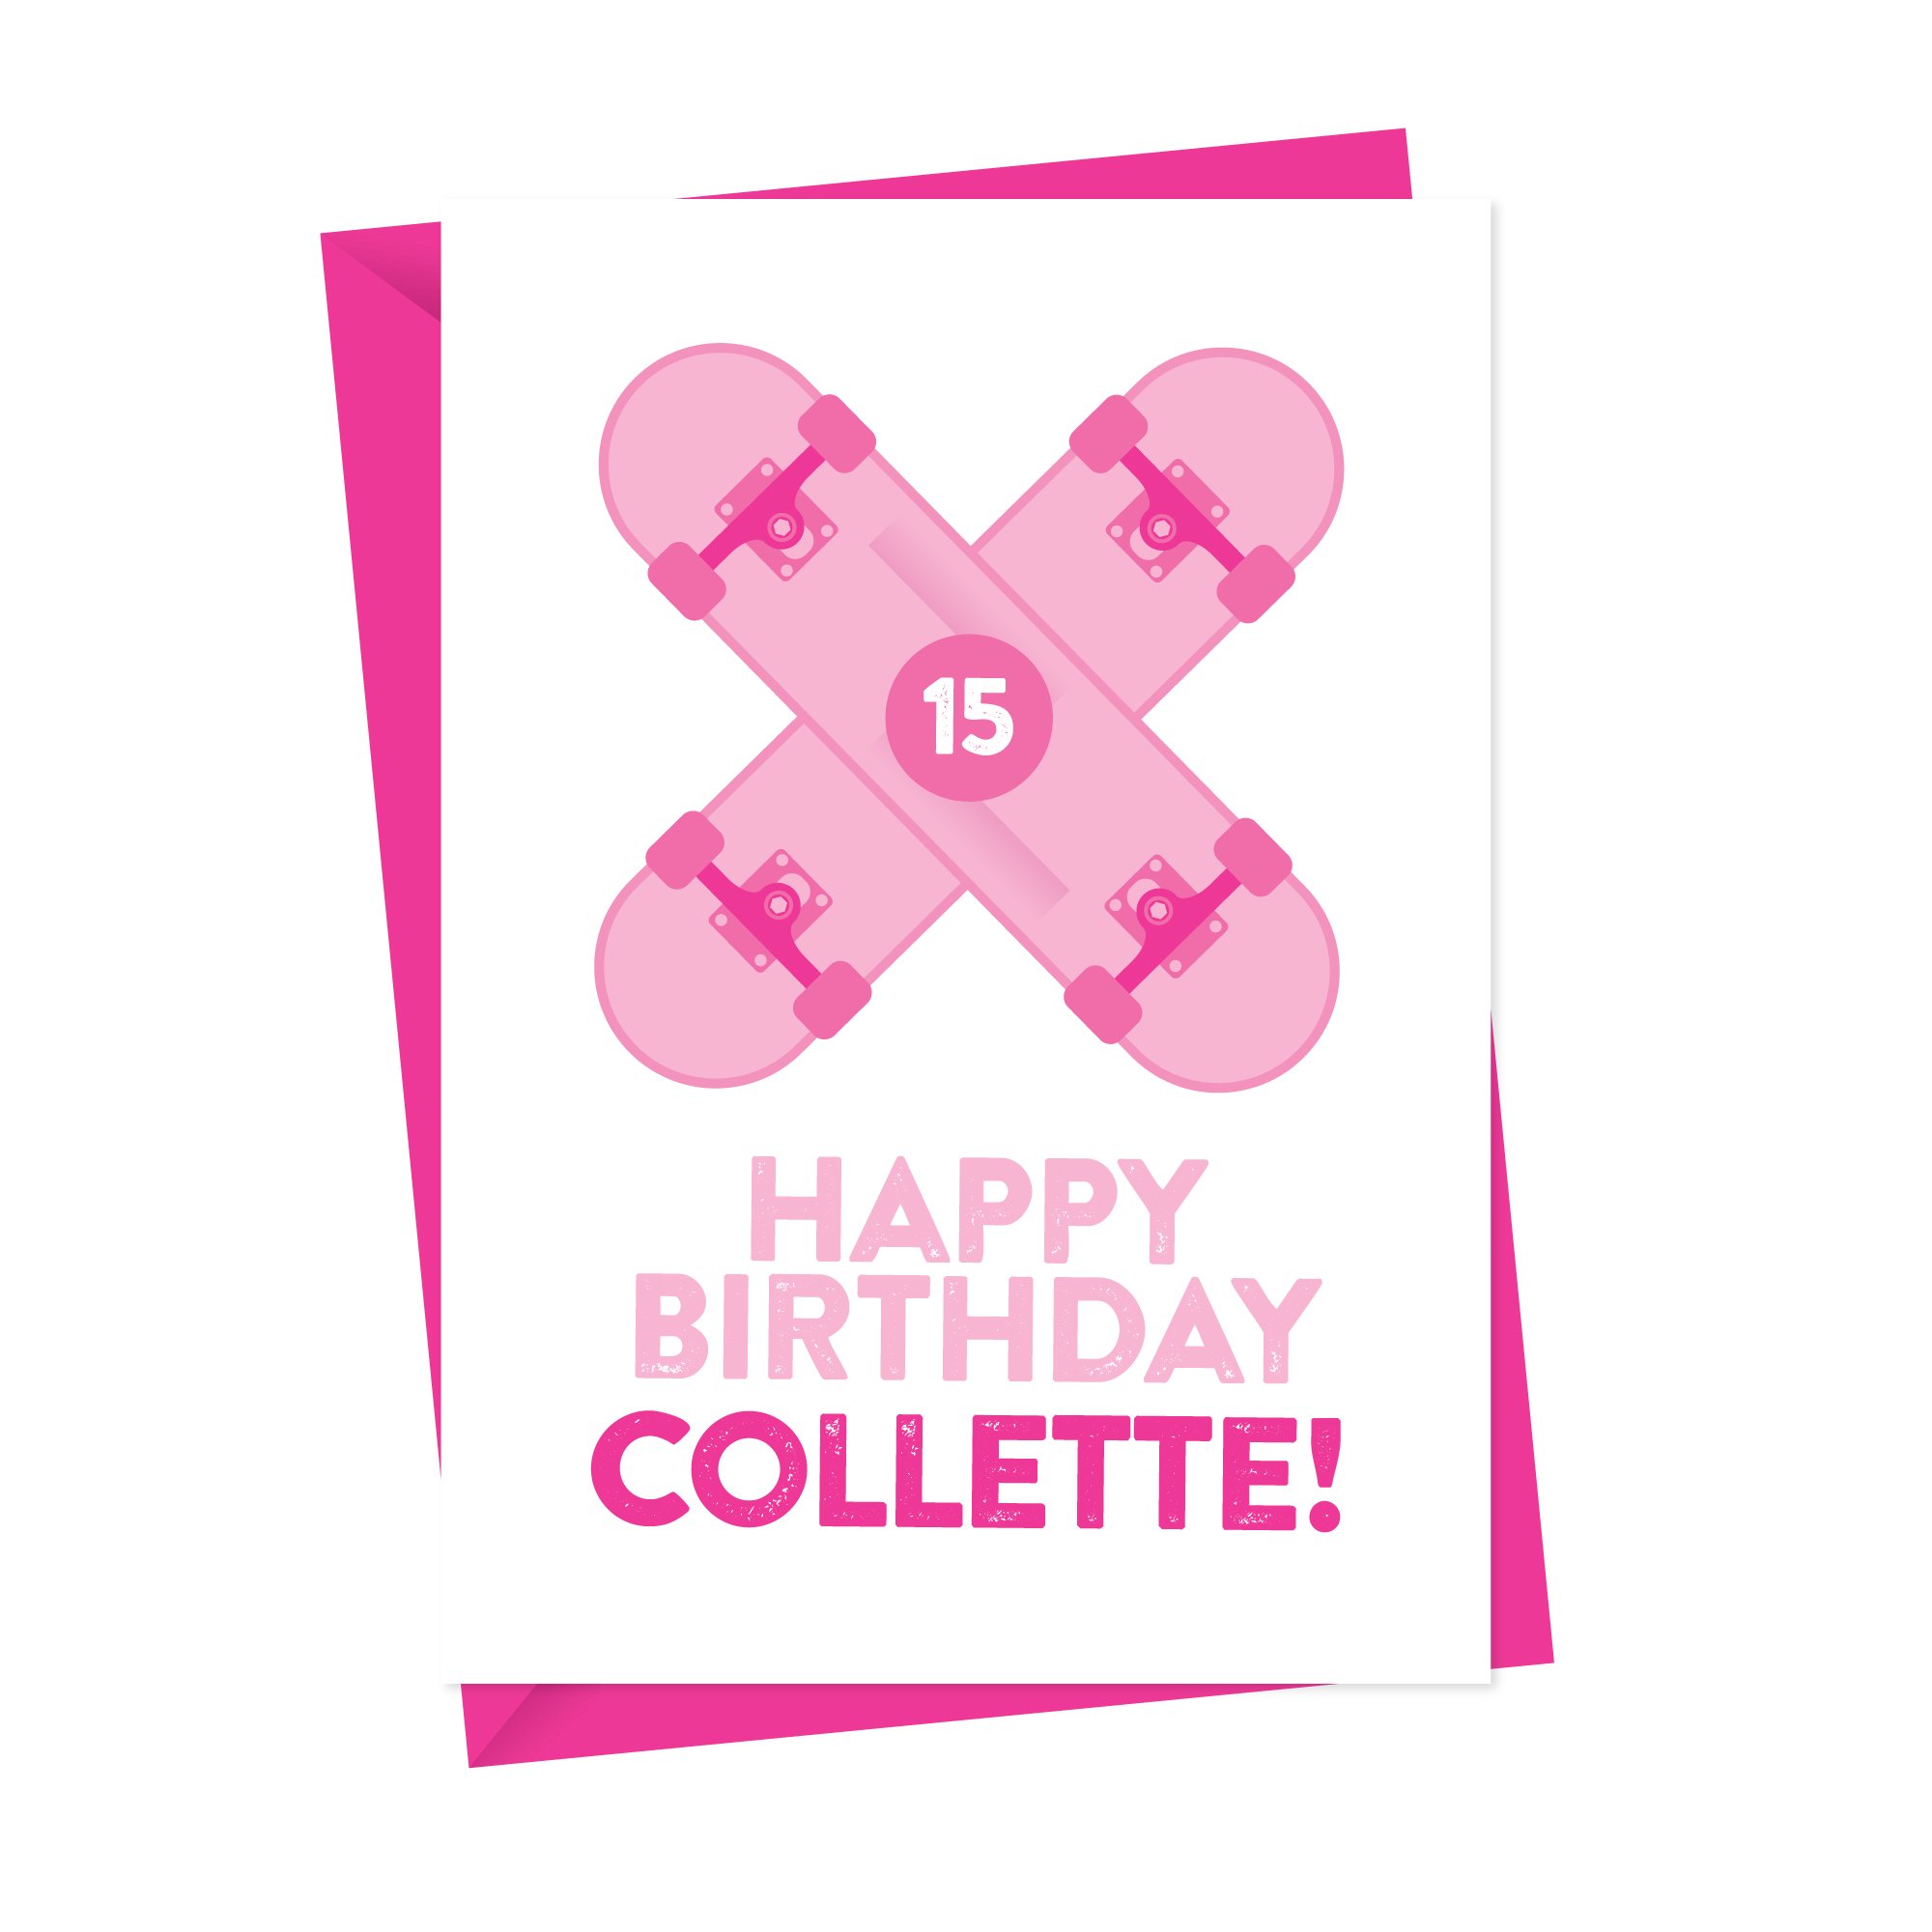 Skateboard-birthday-card-pink